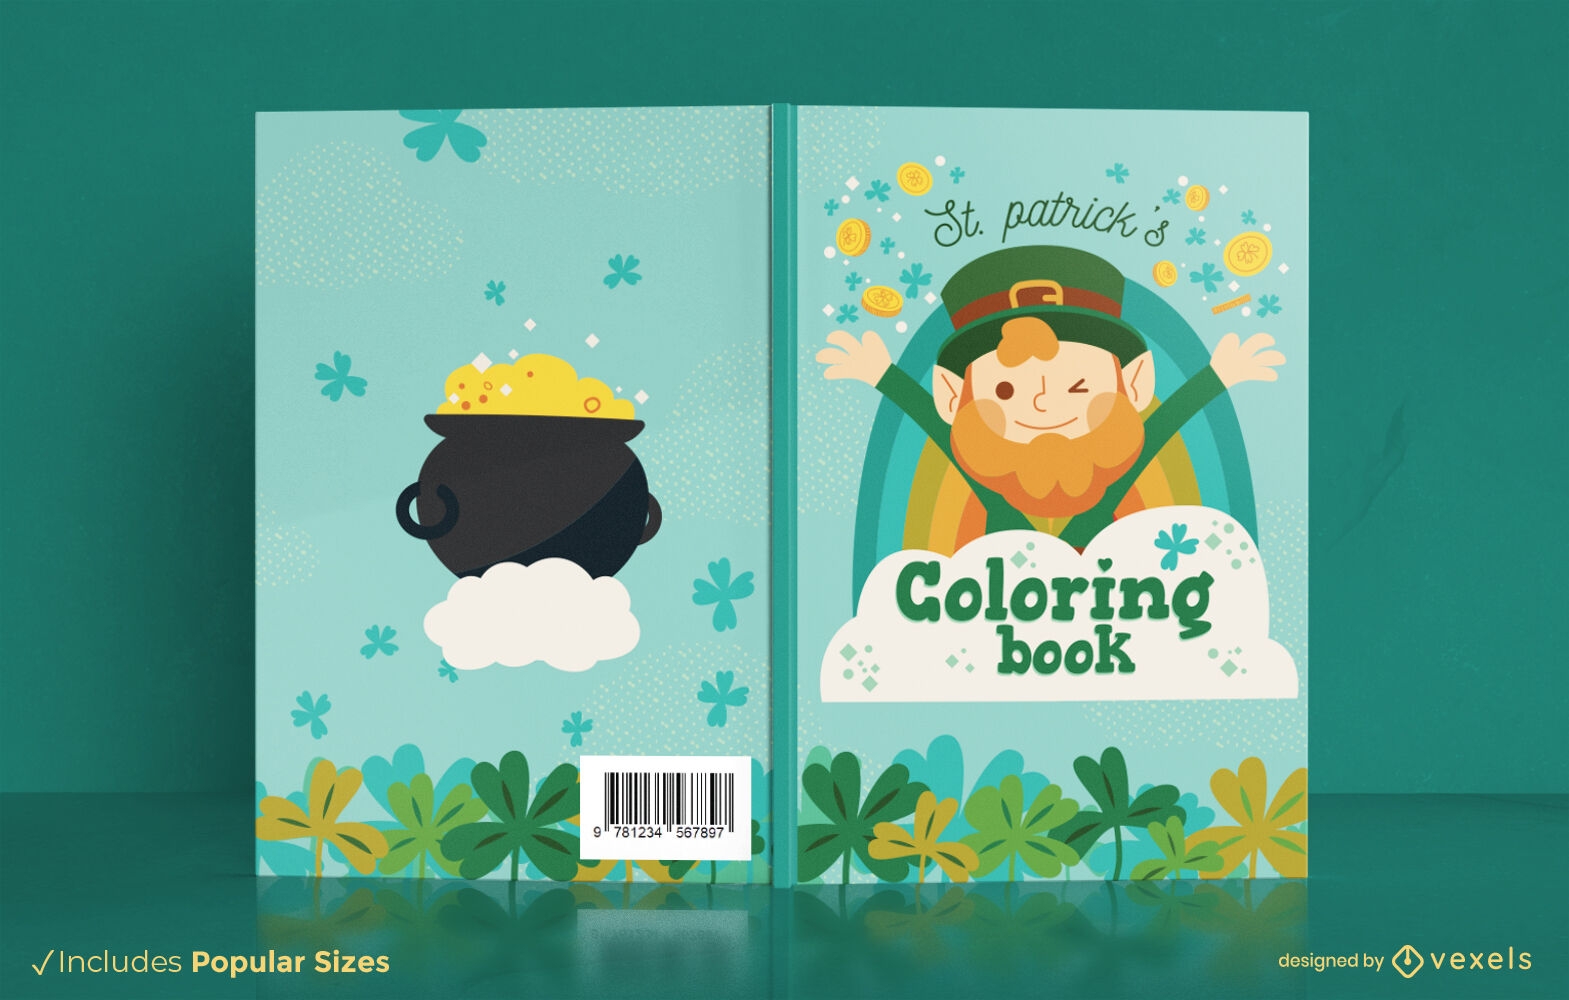 St Patrick's coloring book cover design